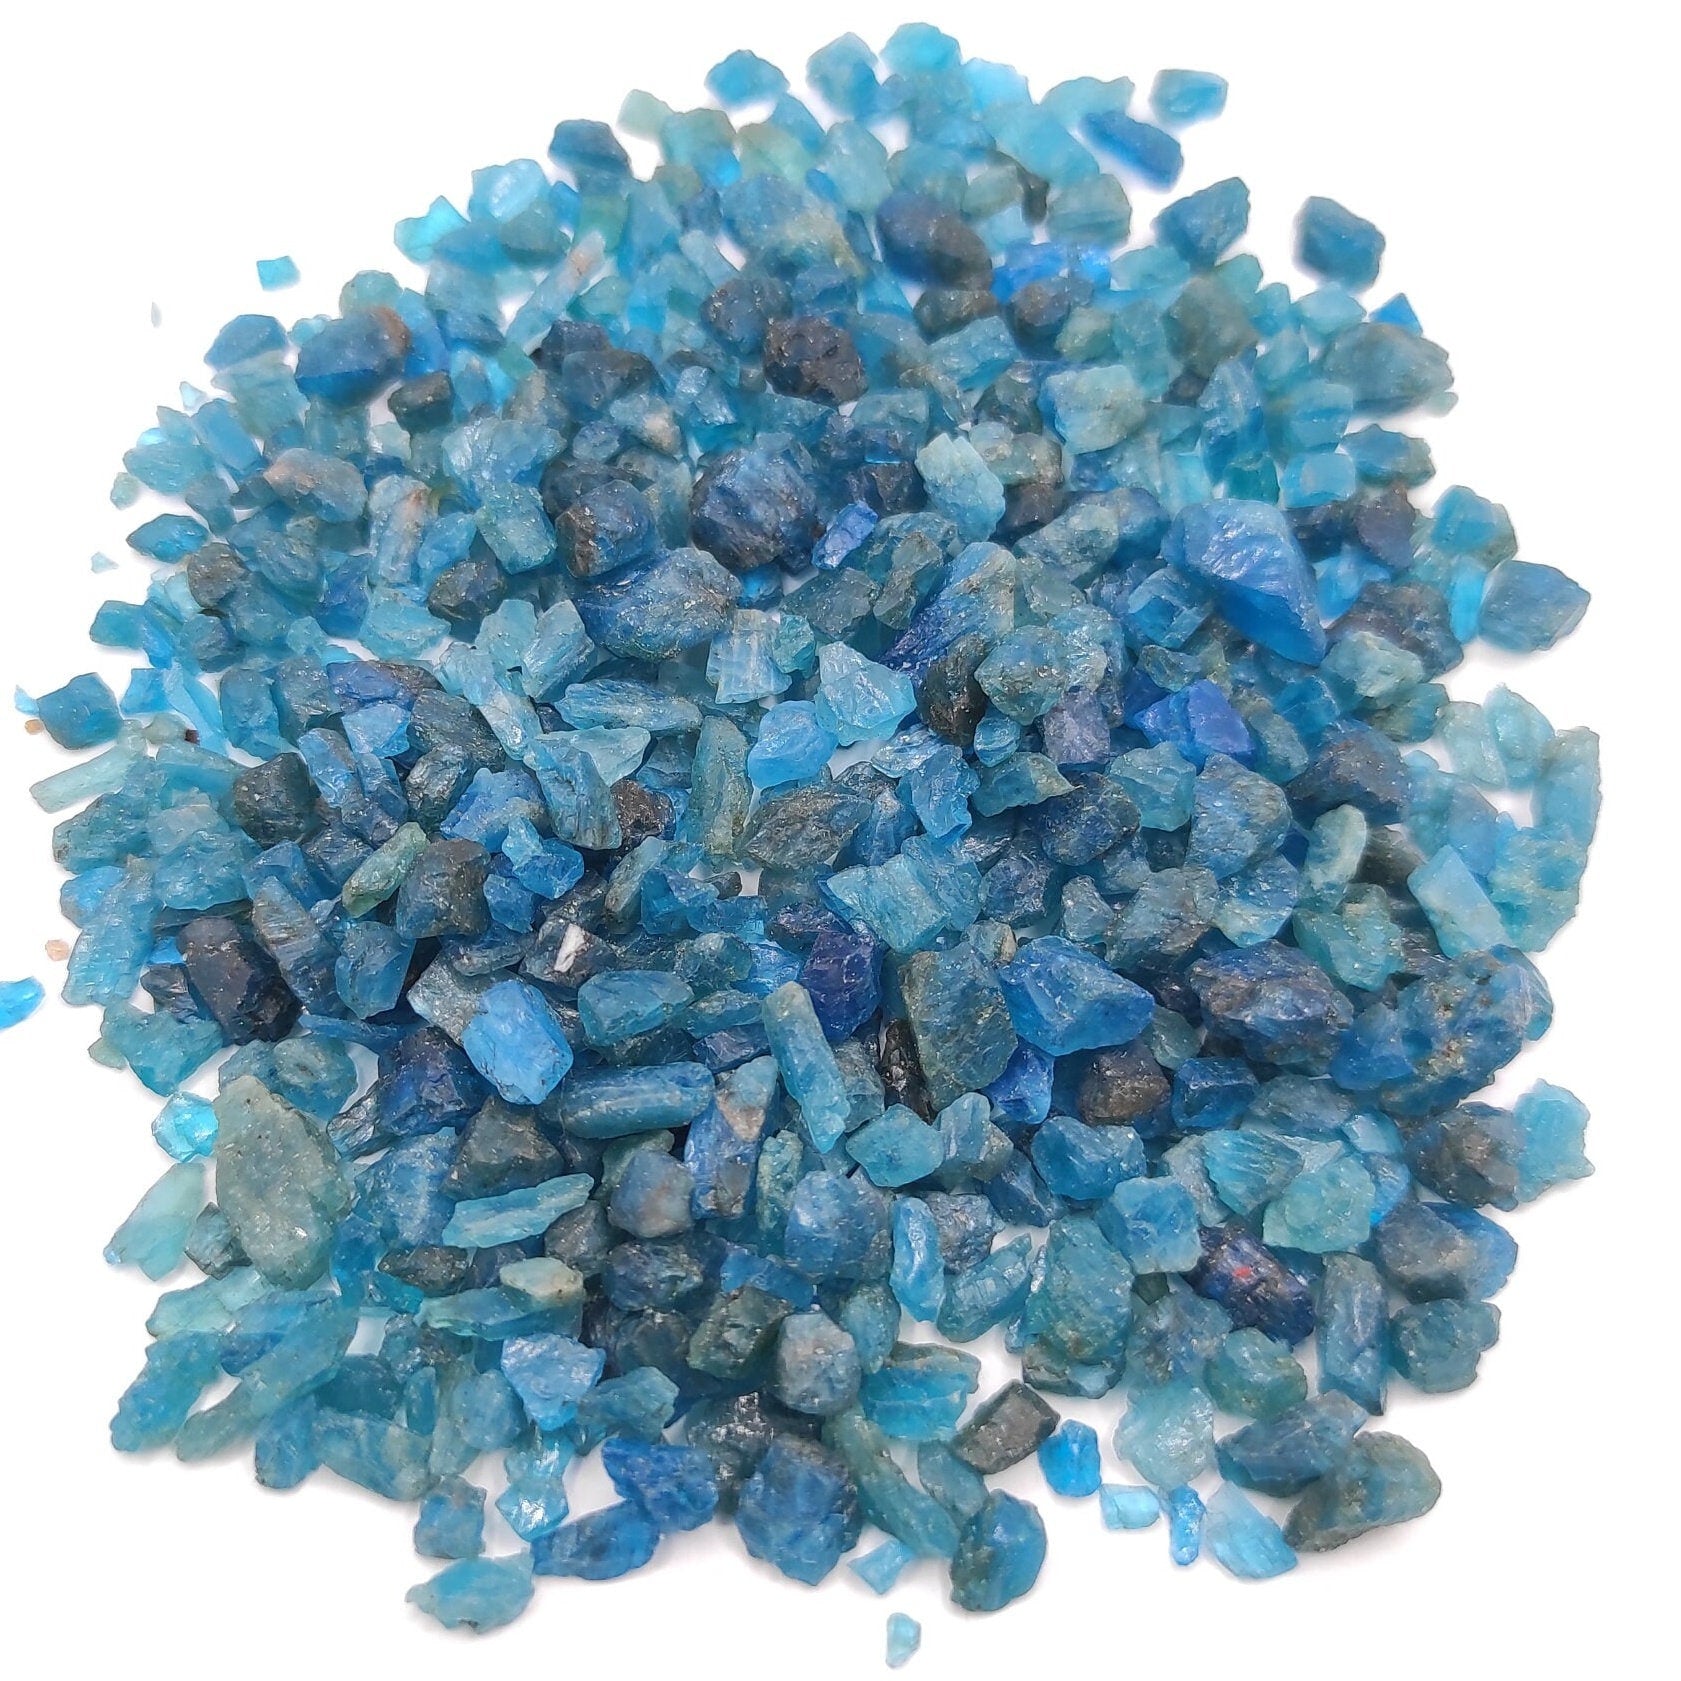 57g Blue Apatite Pieces - Mini Apatite Crystals from Madagascar - Raw Blue Apatite Stones - Rough Apatite Crystal Gravel